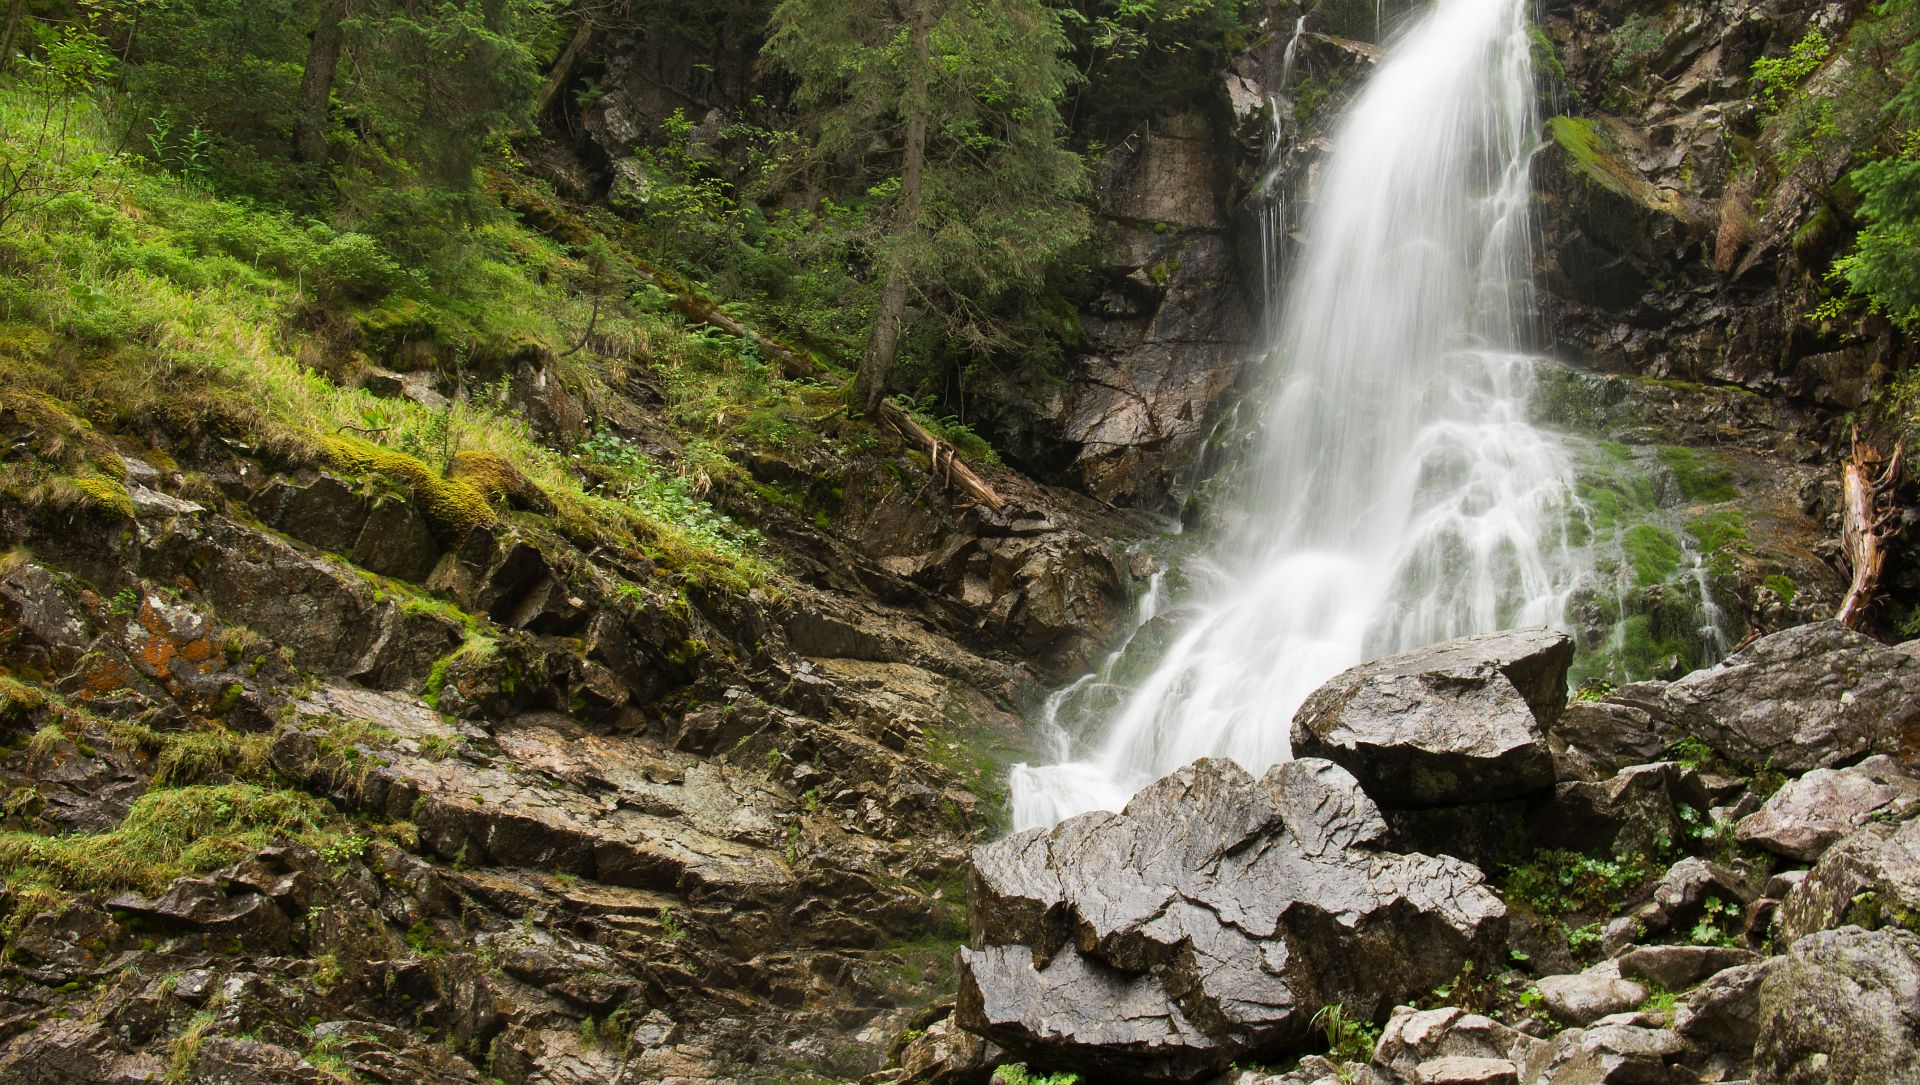 The Rohacsky Waterfall